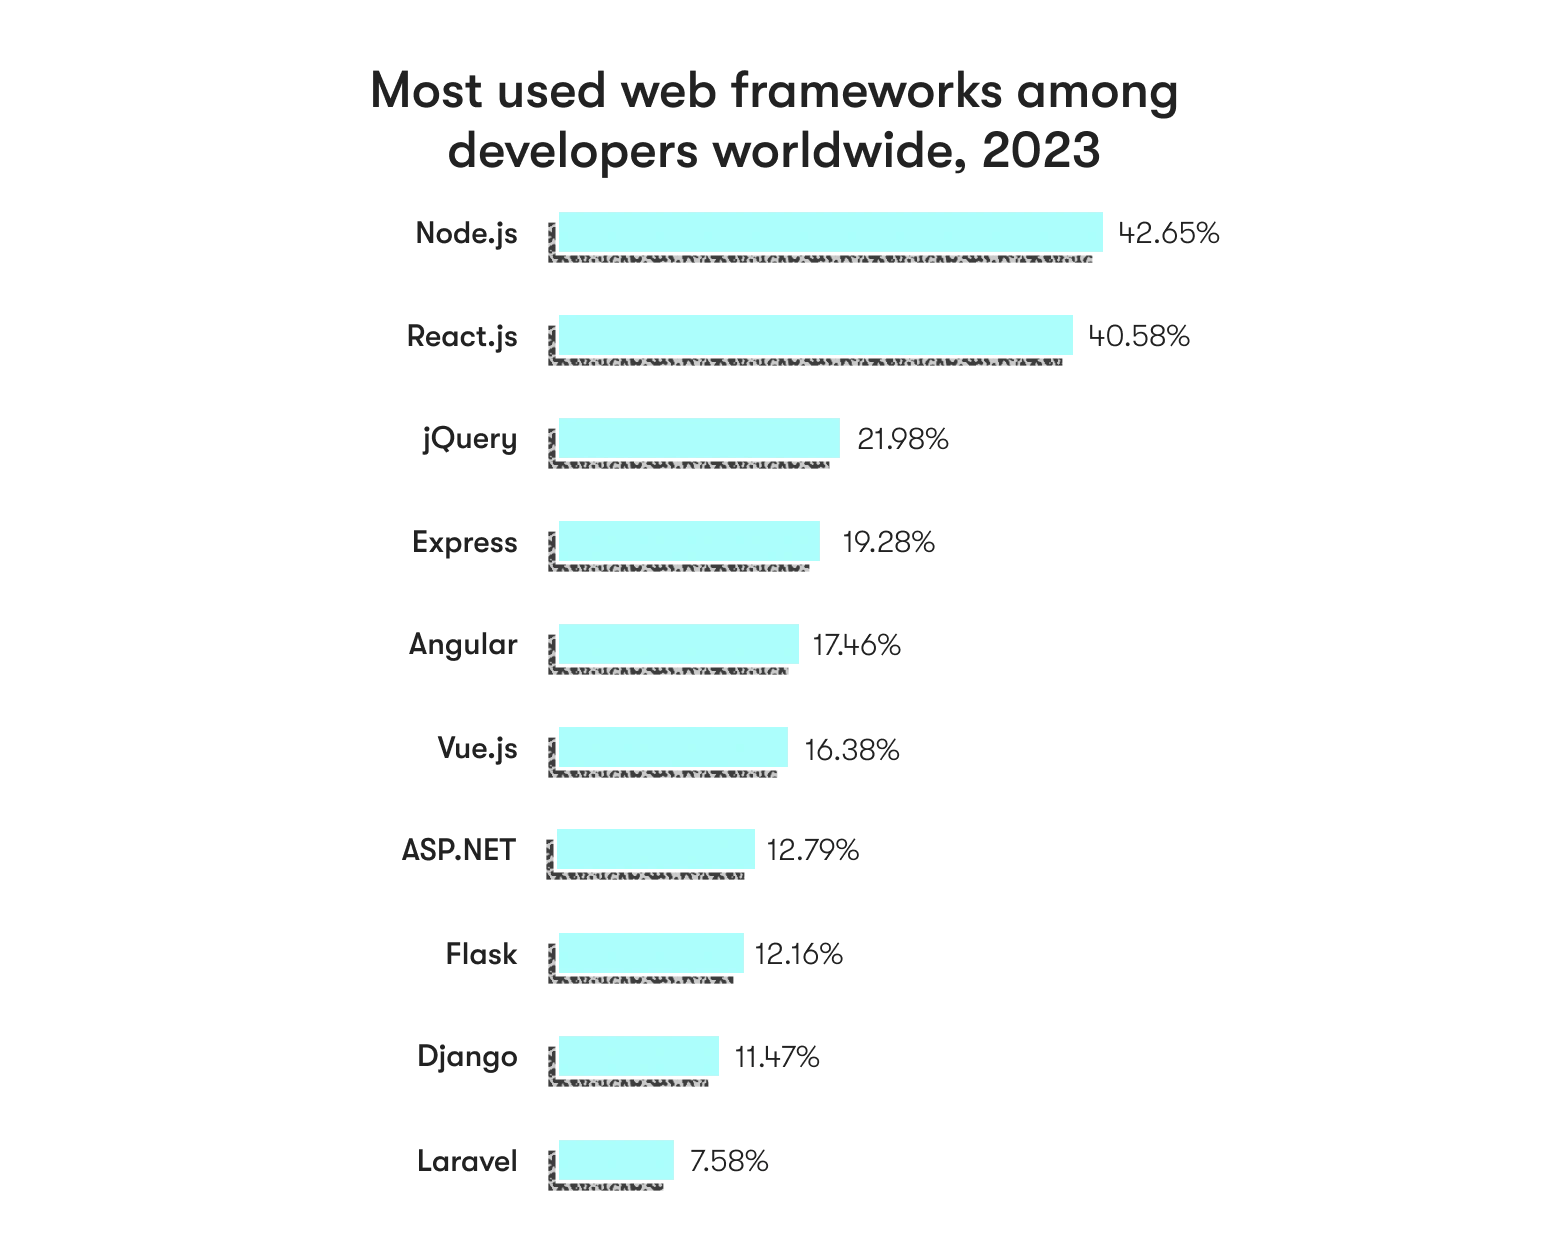 most used web frameworks